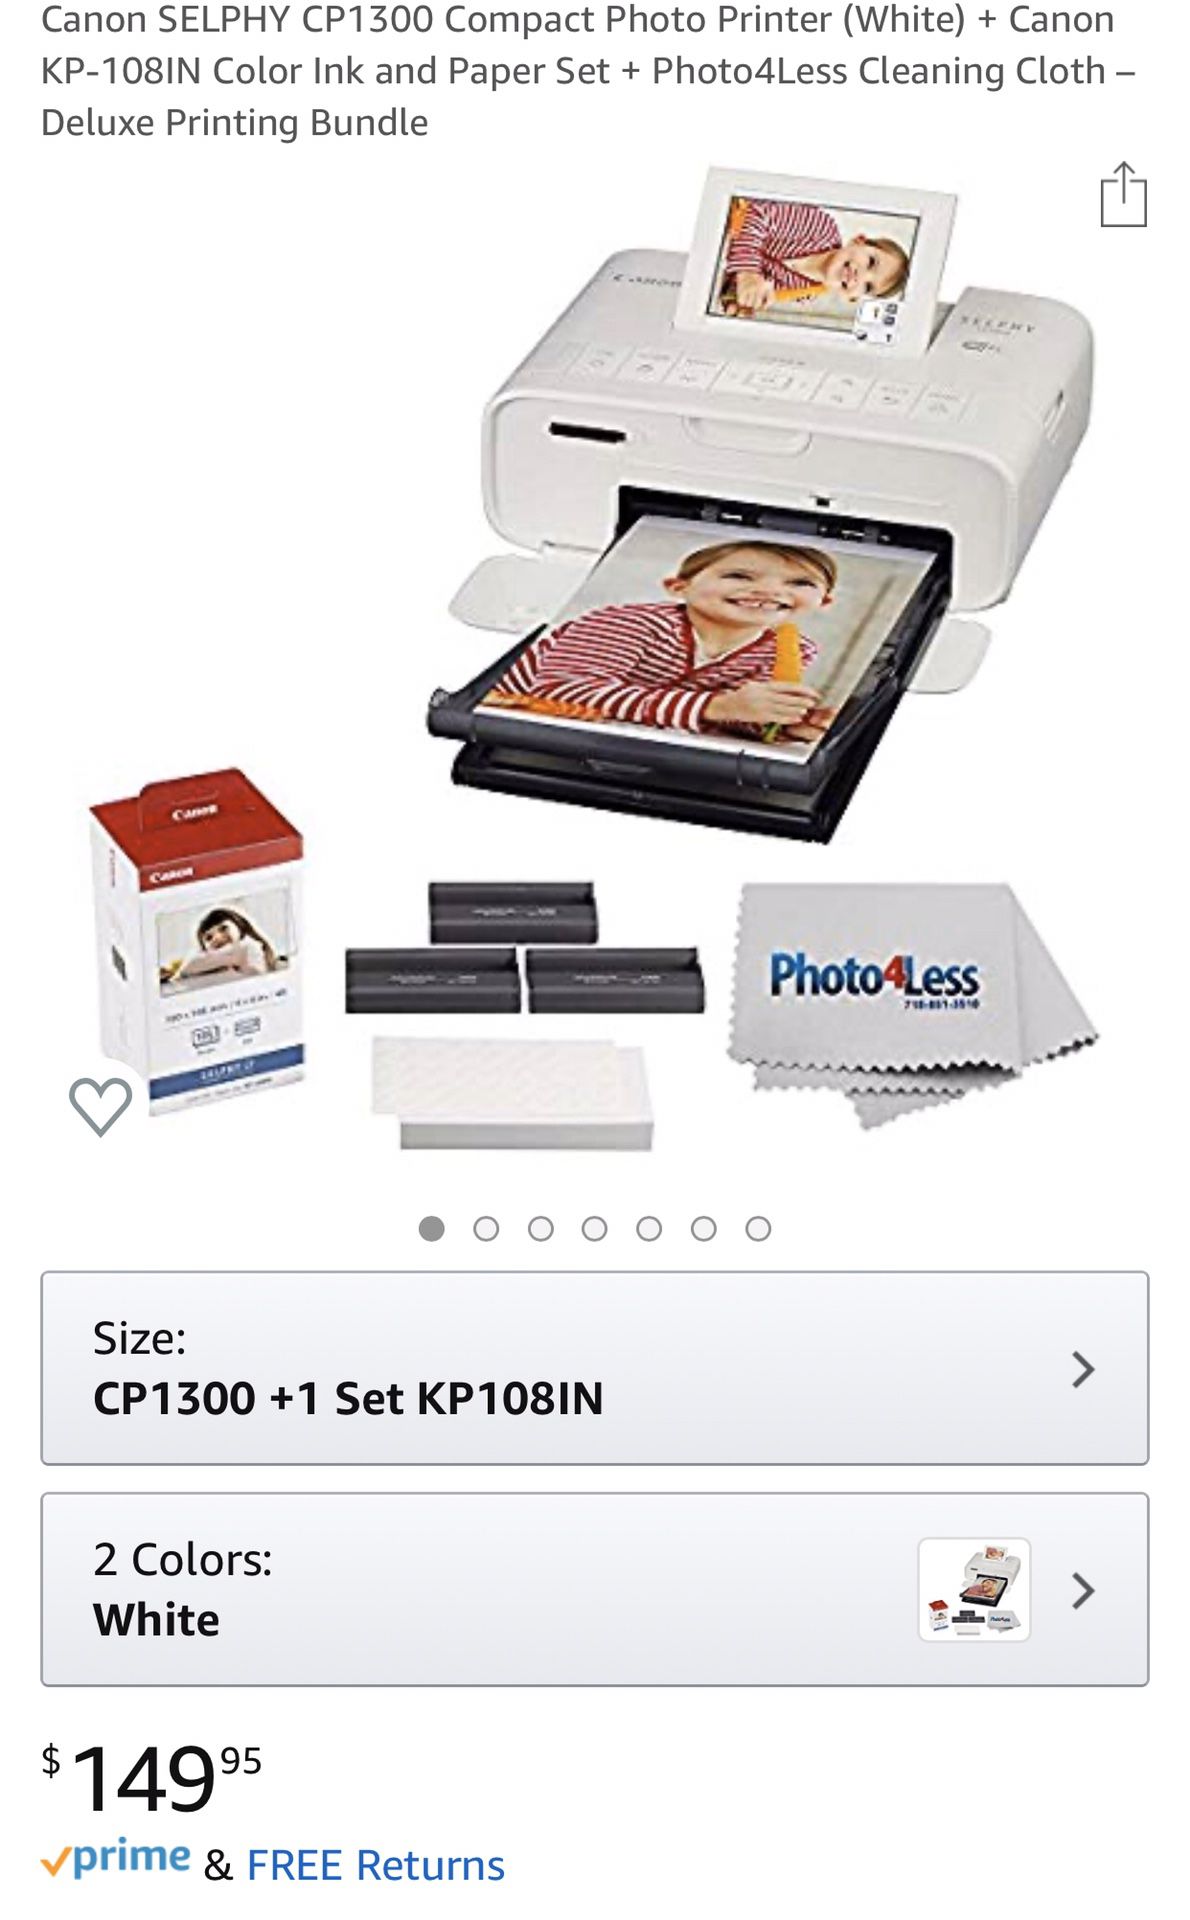 Compact Photo Printer